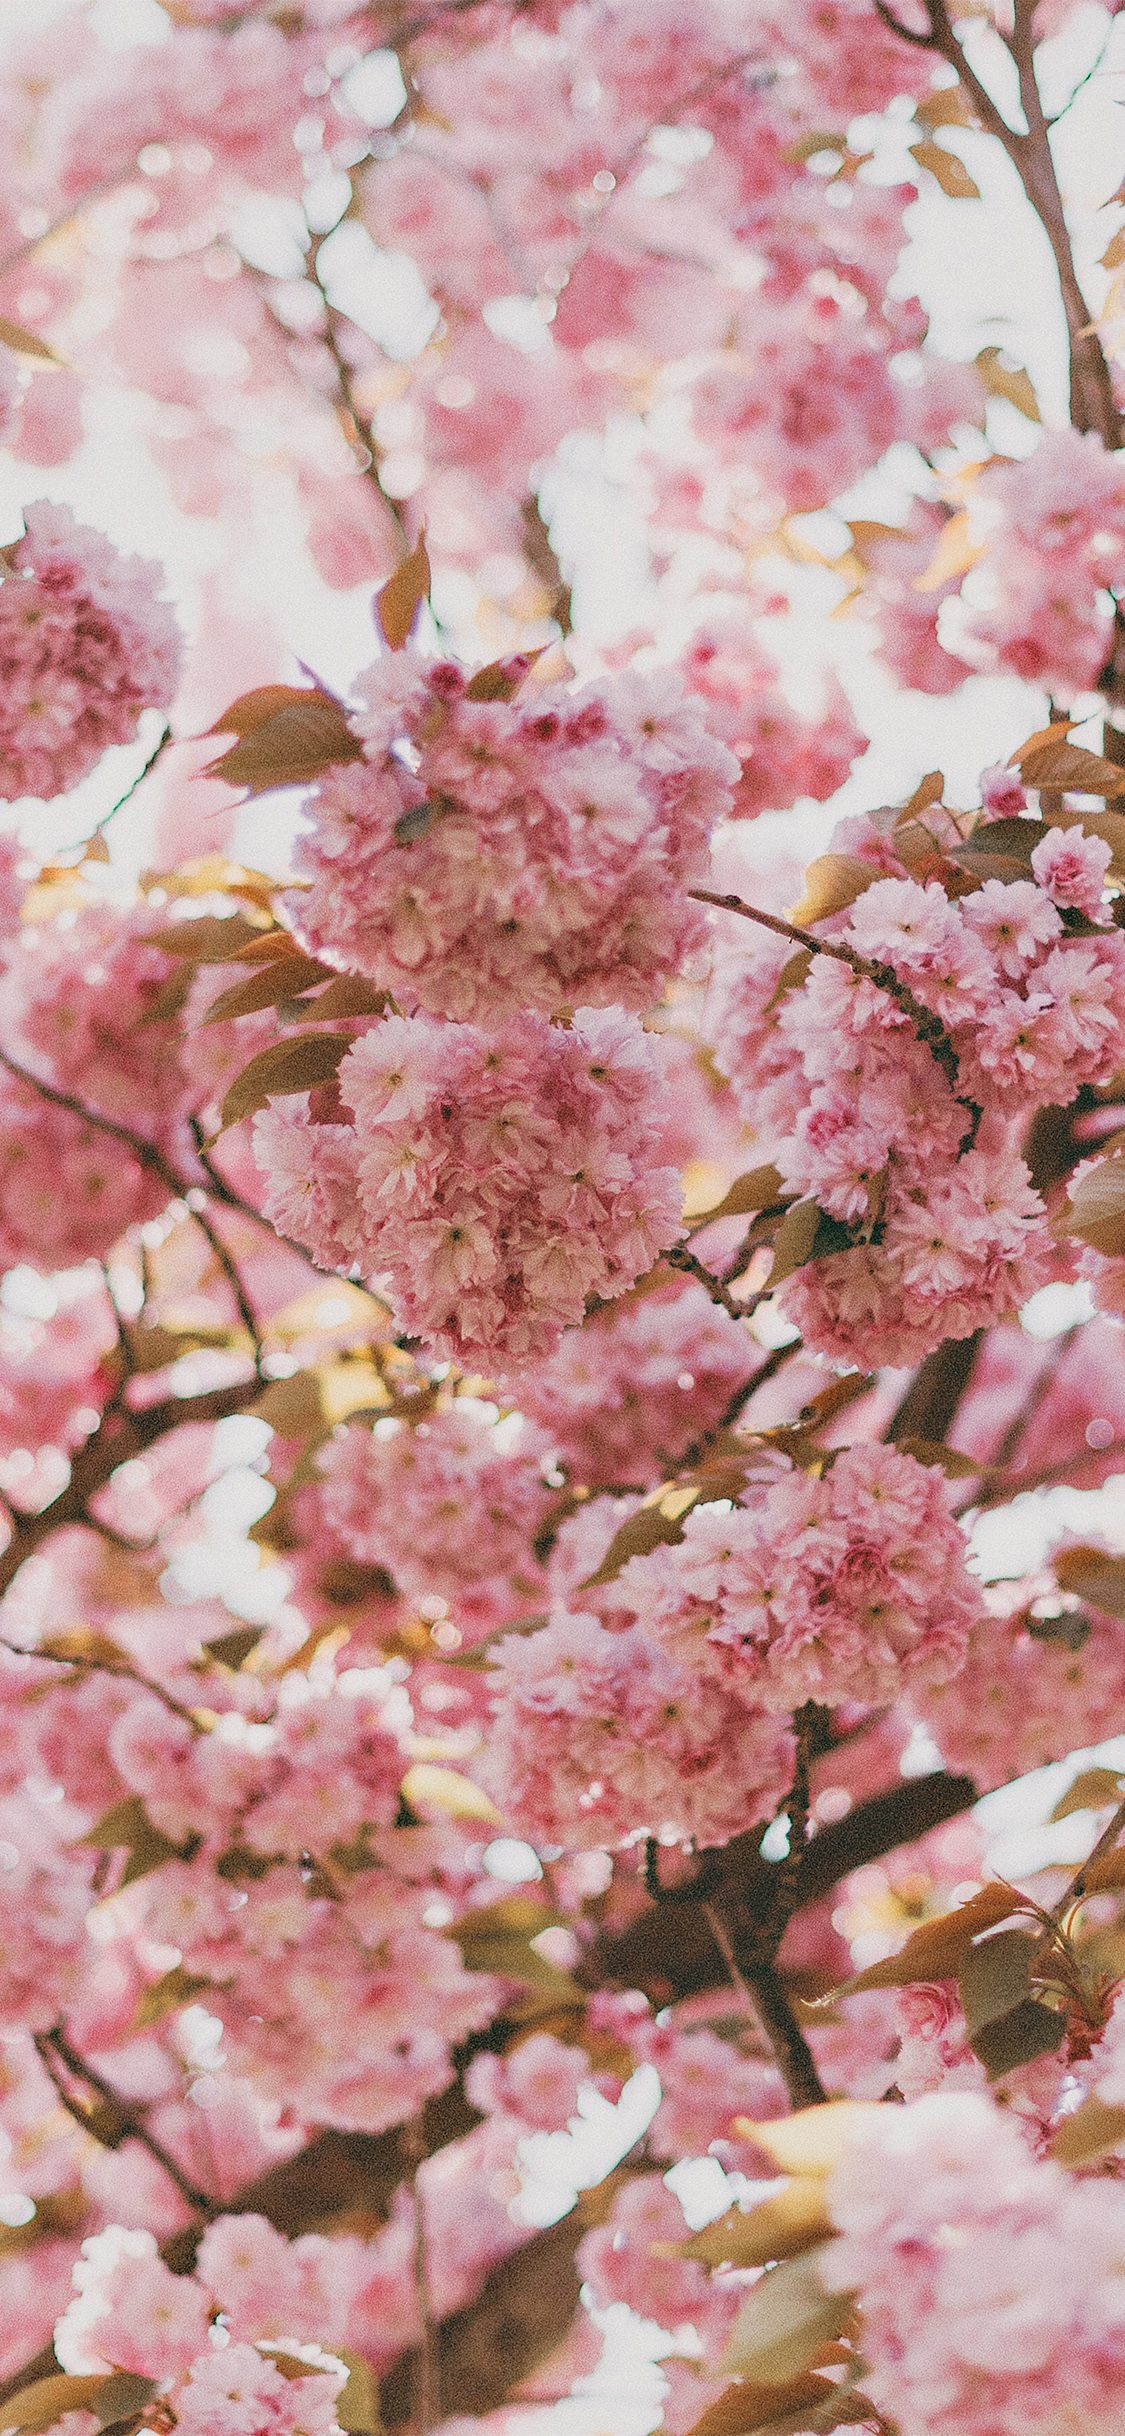 iPhone X wallpaper. spring flower pink blossom bokeh nature